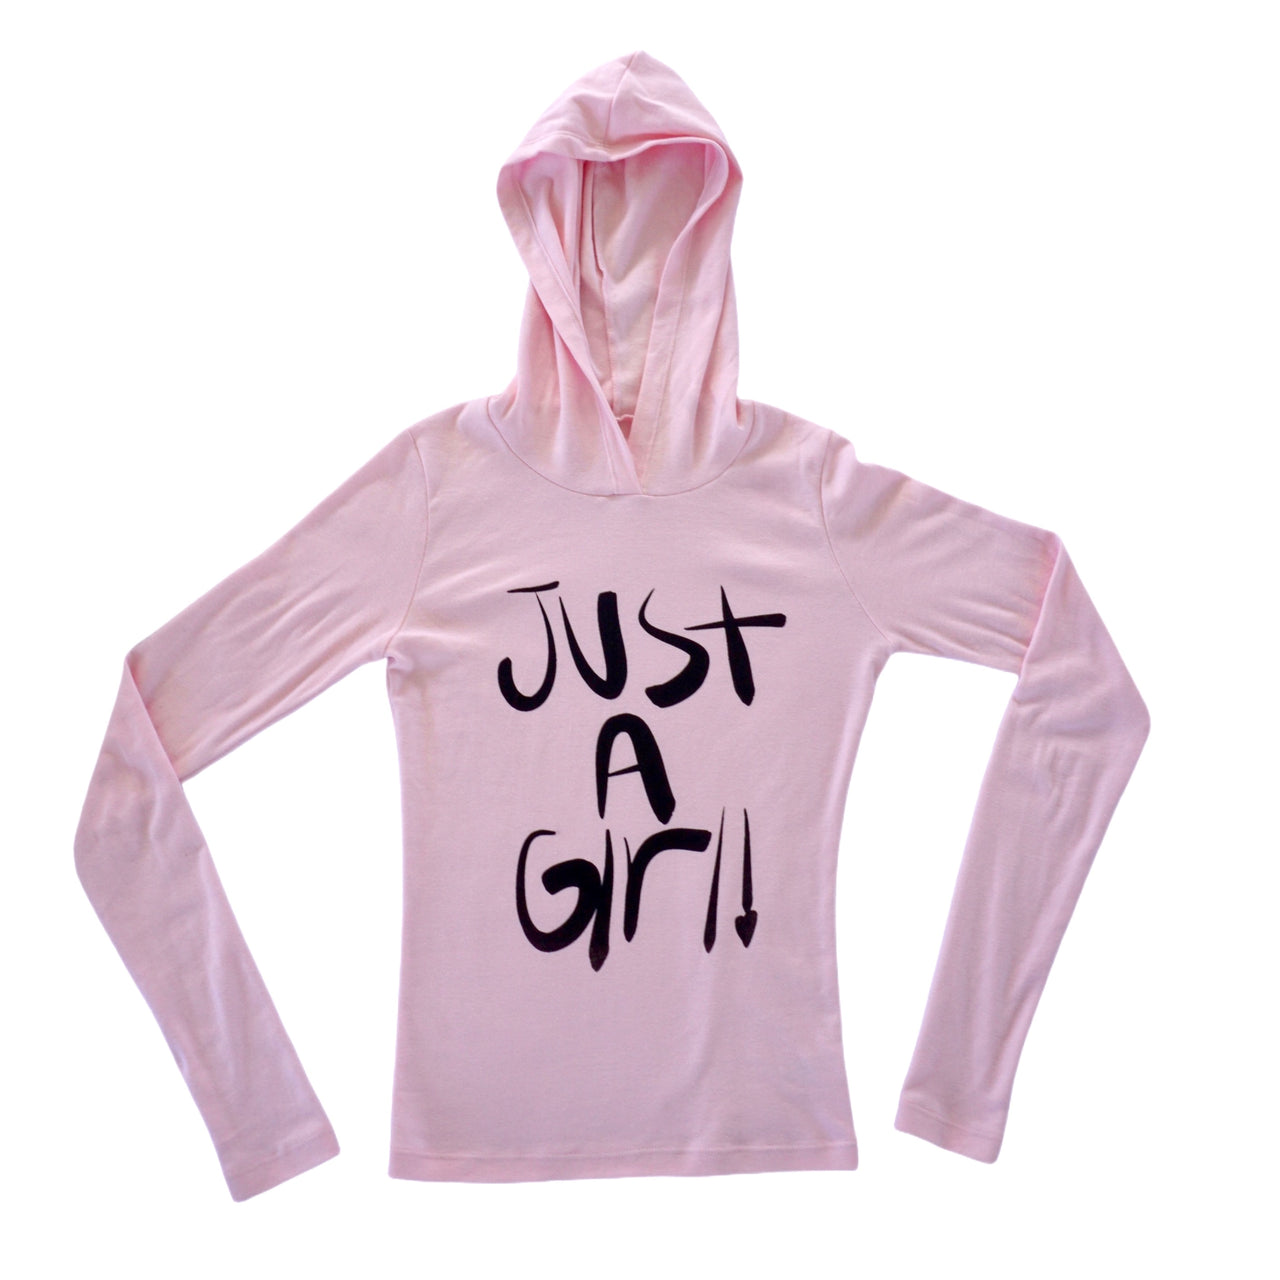 Just A Girl! baby pink long sleeve hoodie